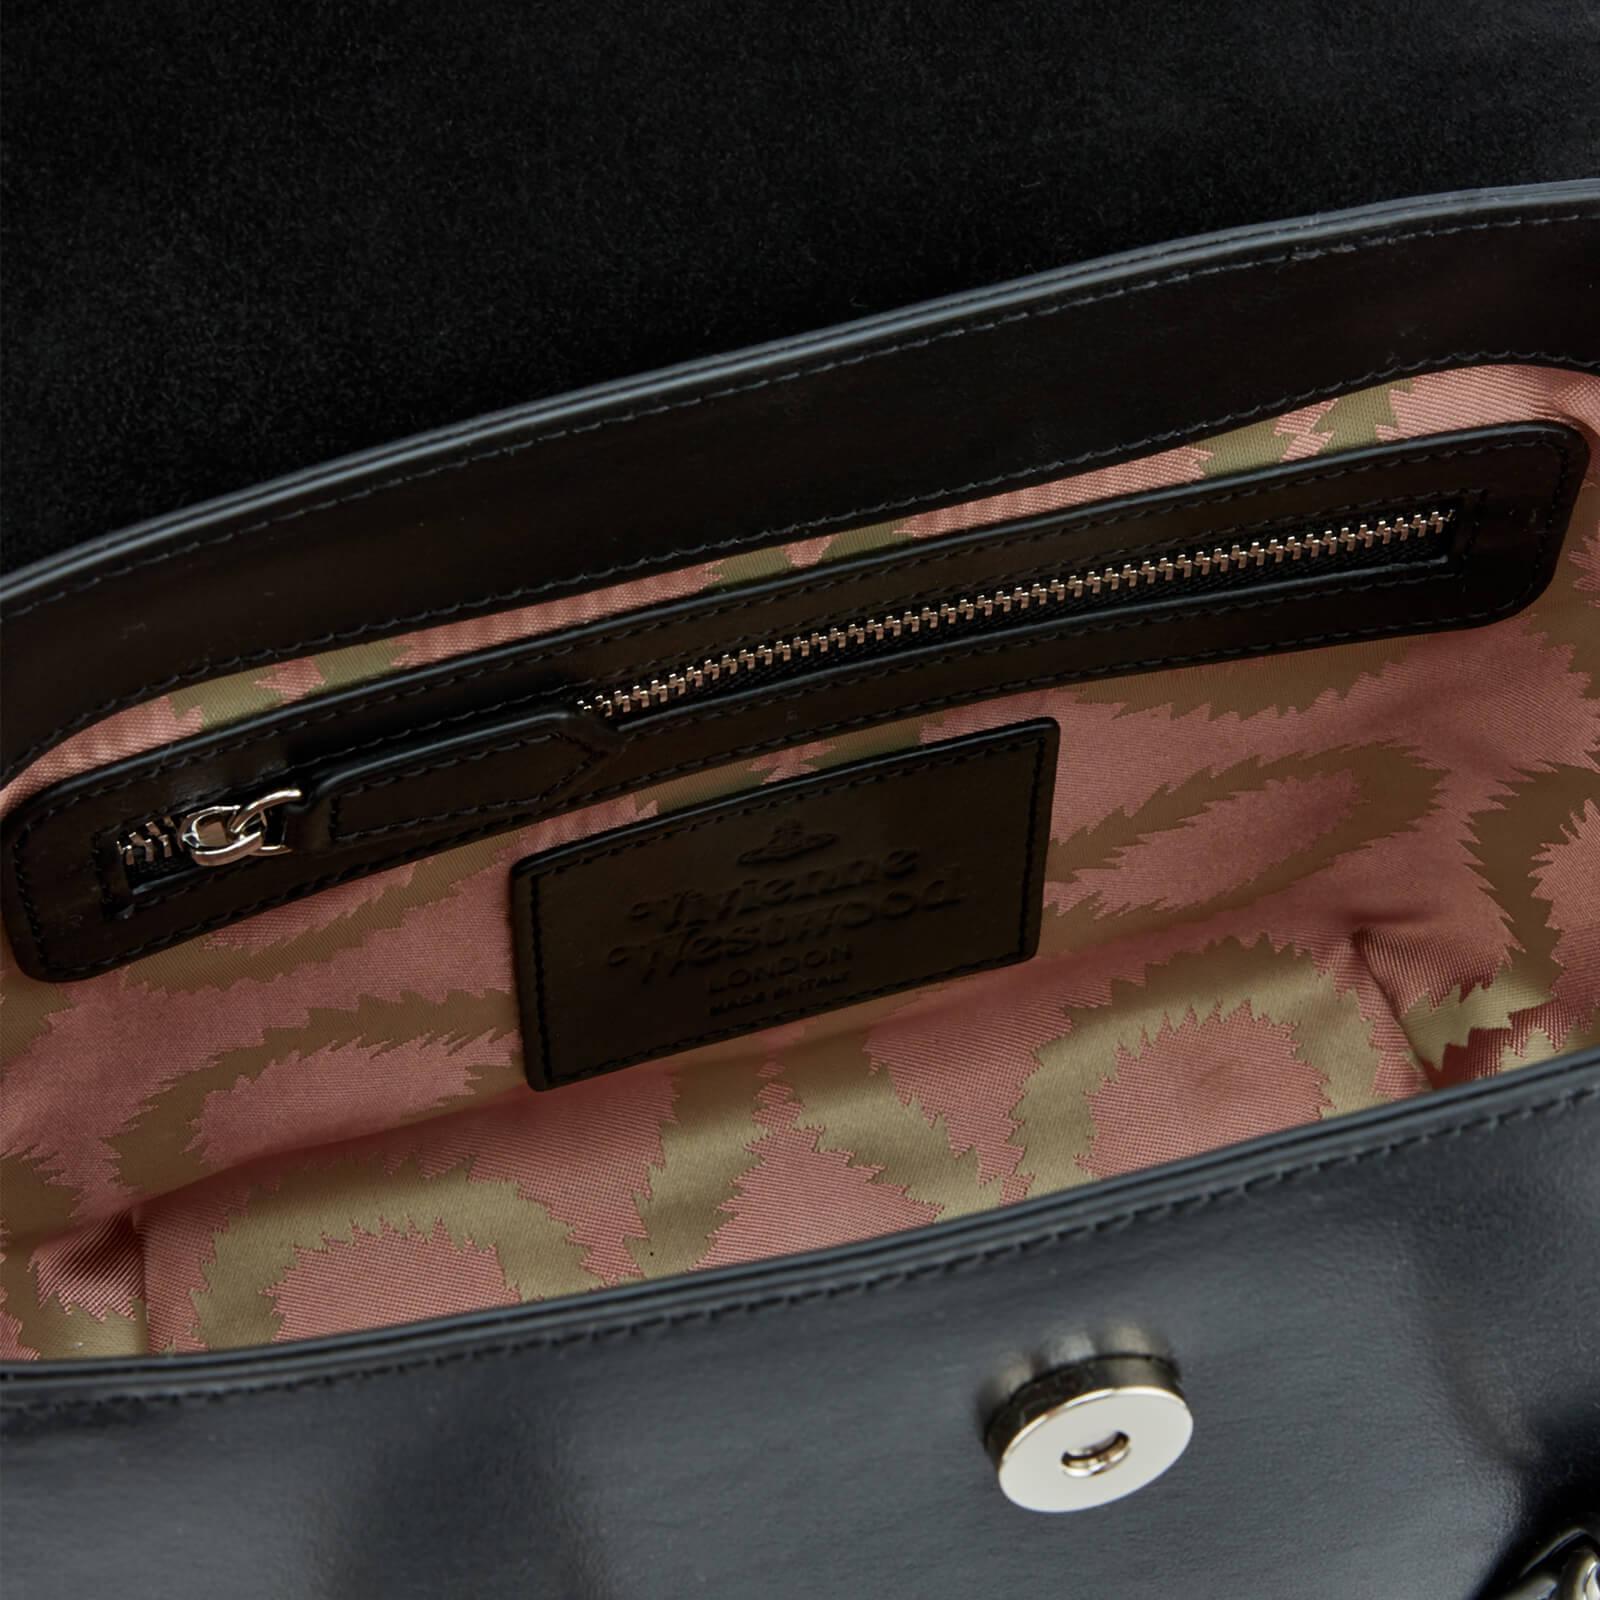 Vivienne Westwood Leather Matilda Small Handbag in Black - Lyst